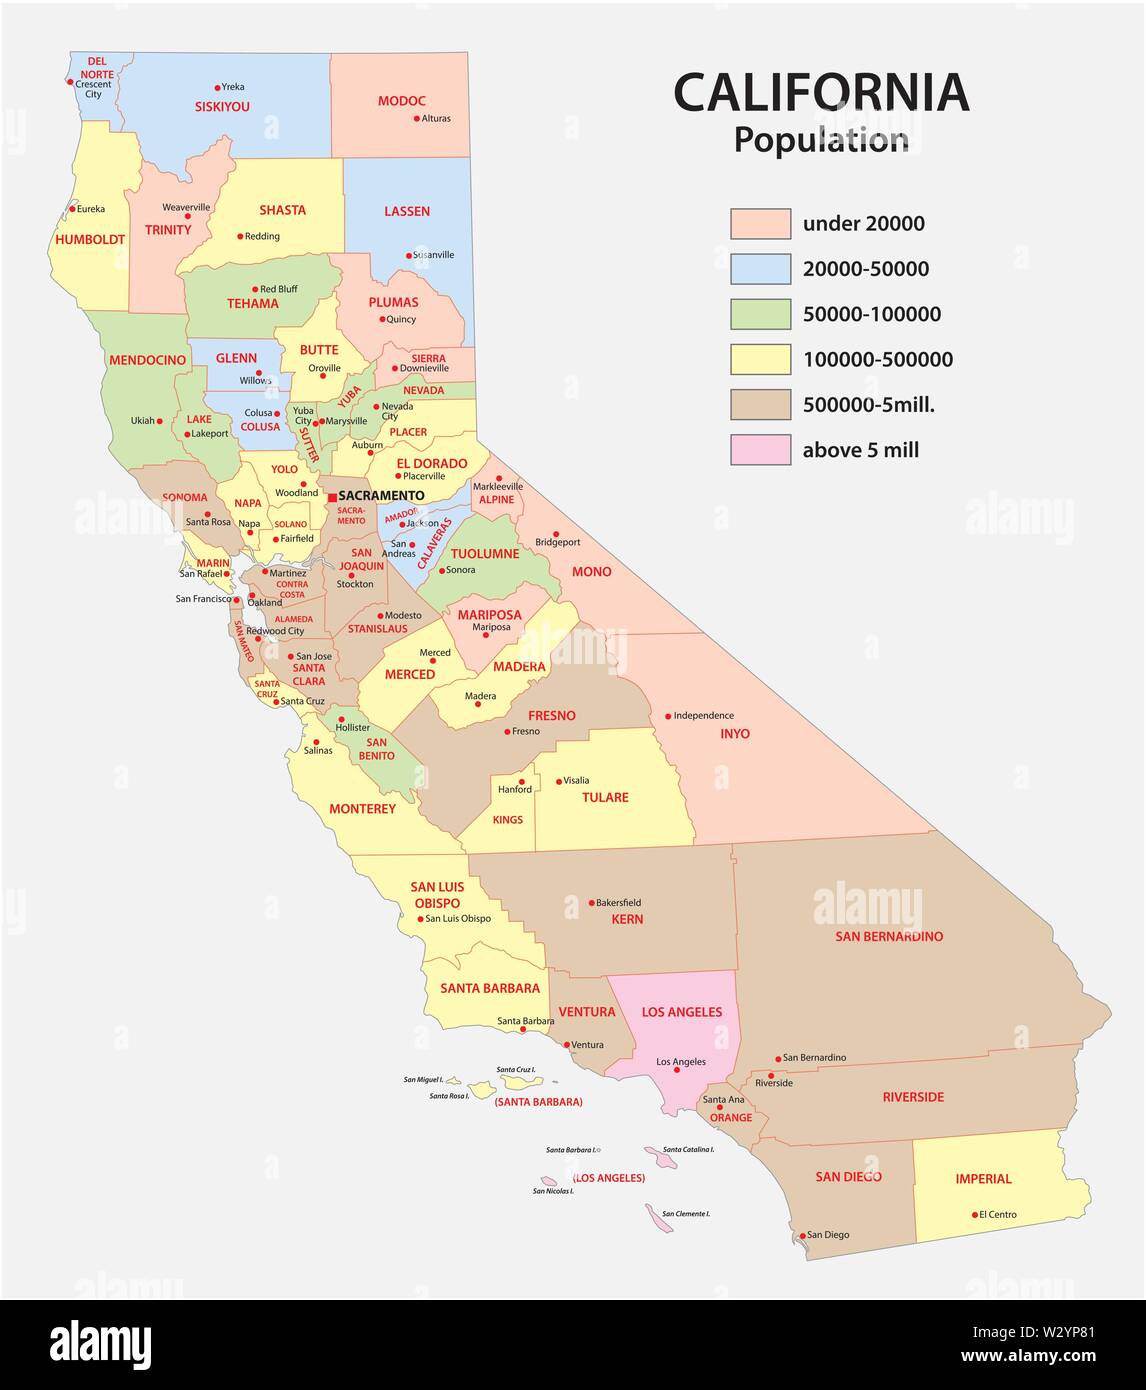 Eureka, Map, Population, & California